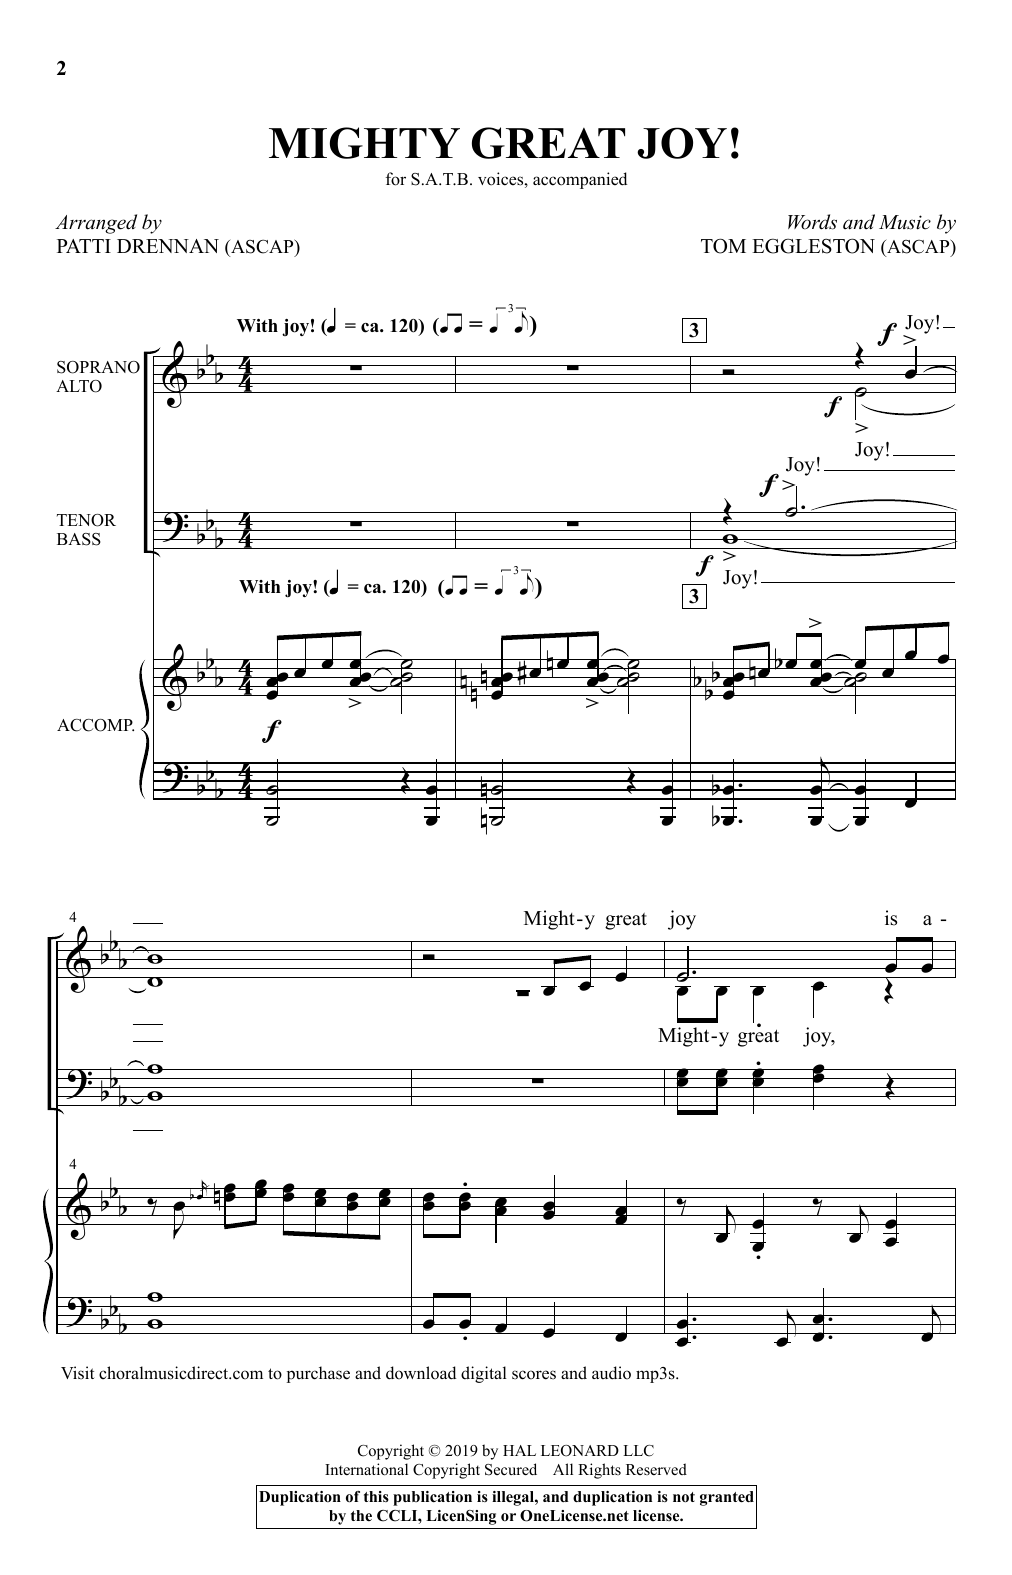 Tom Eggleston Mighty Great Joy! (arr. Patti Drennan) Sheet Music Notes & Chords for SATB Choir - Download or Print PDF